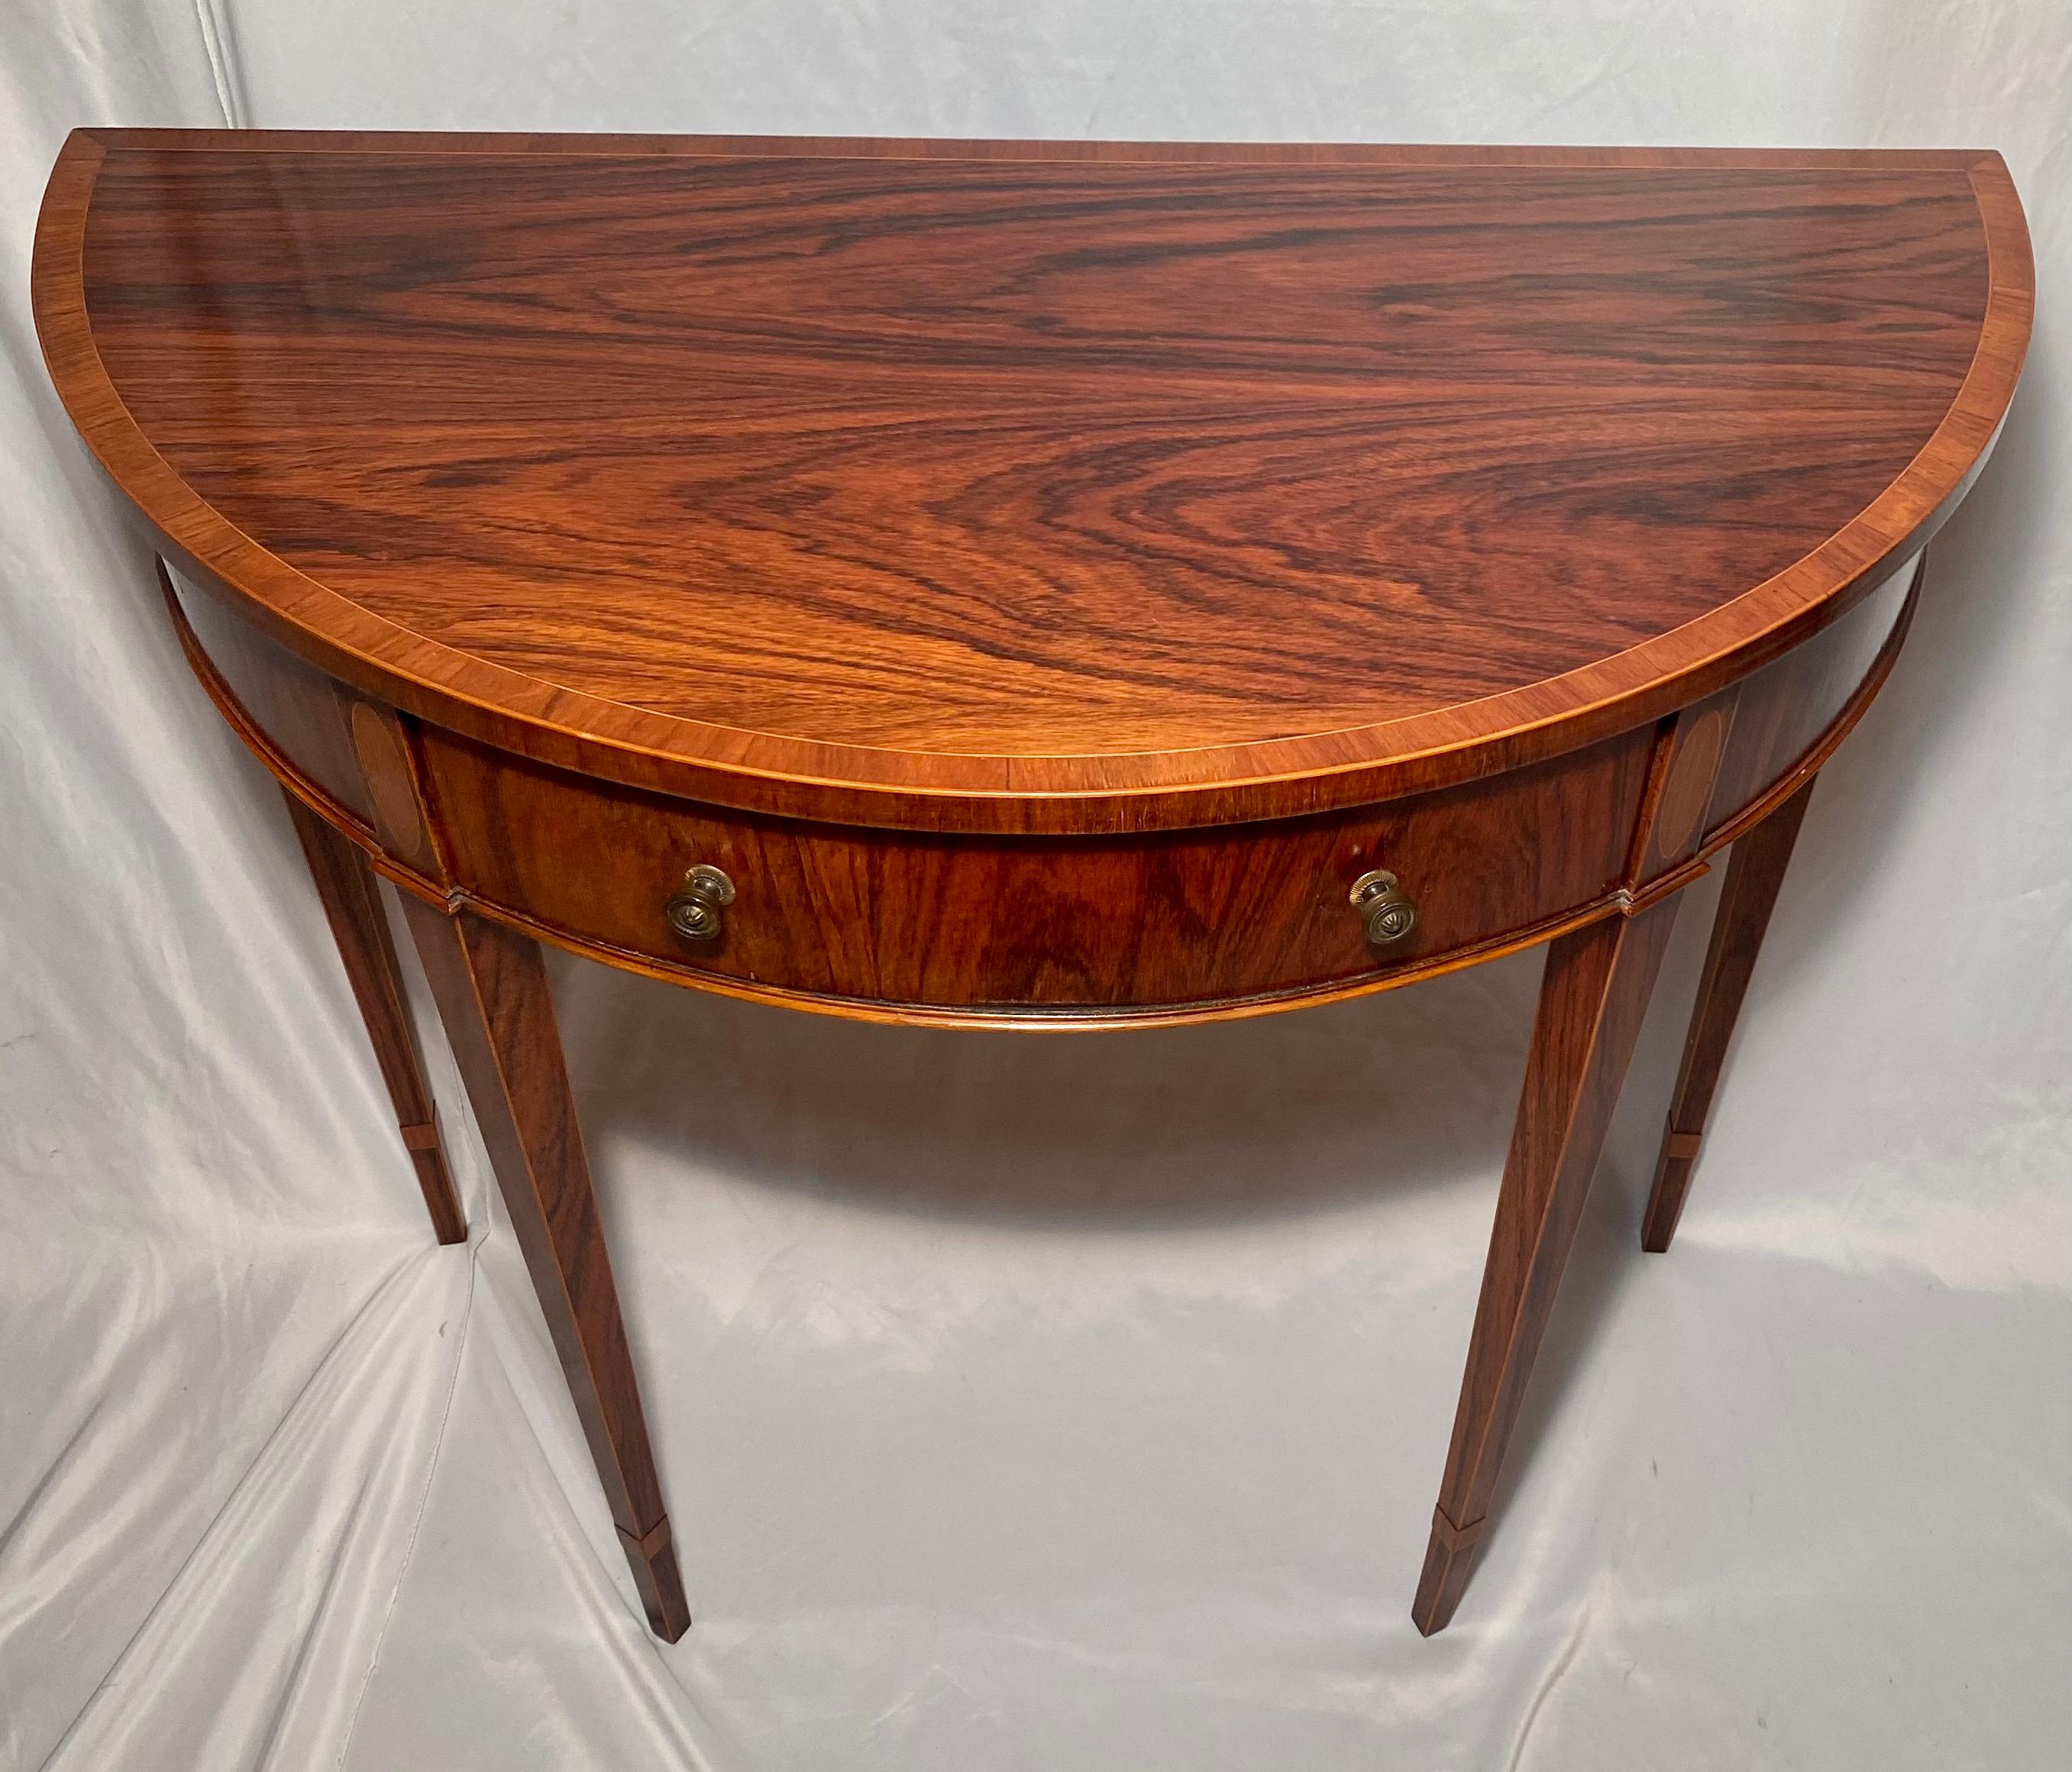 Antique English rosewood demilune console table, circa 1890.
 
  